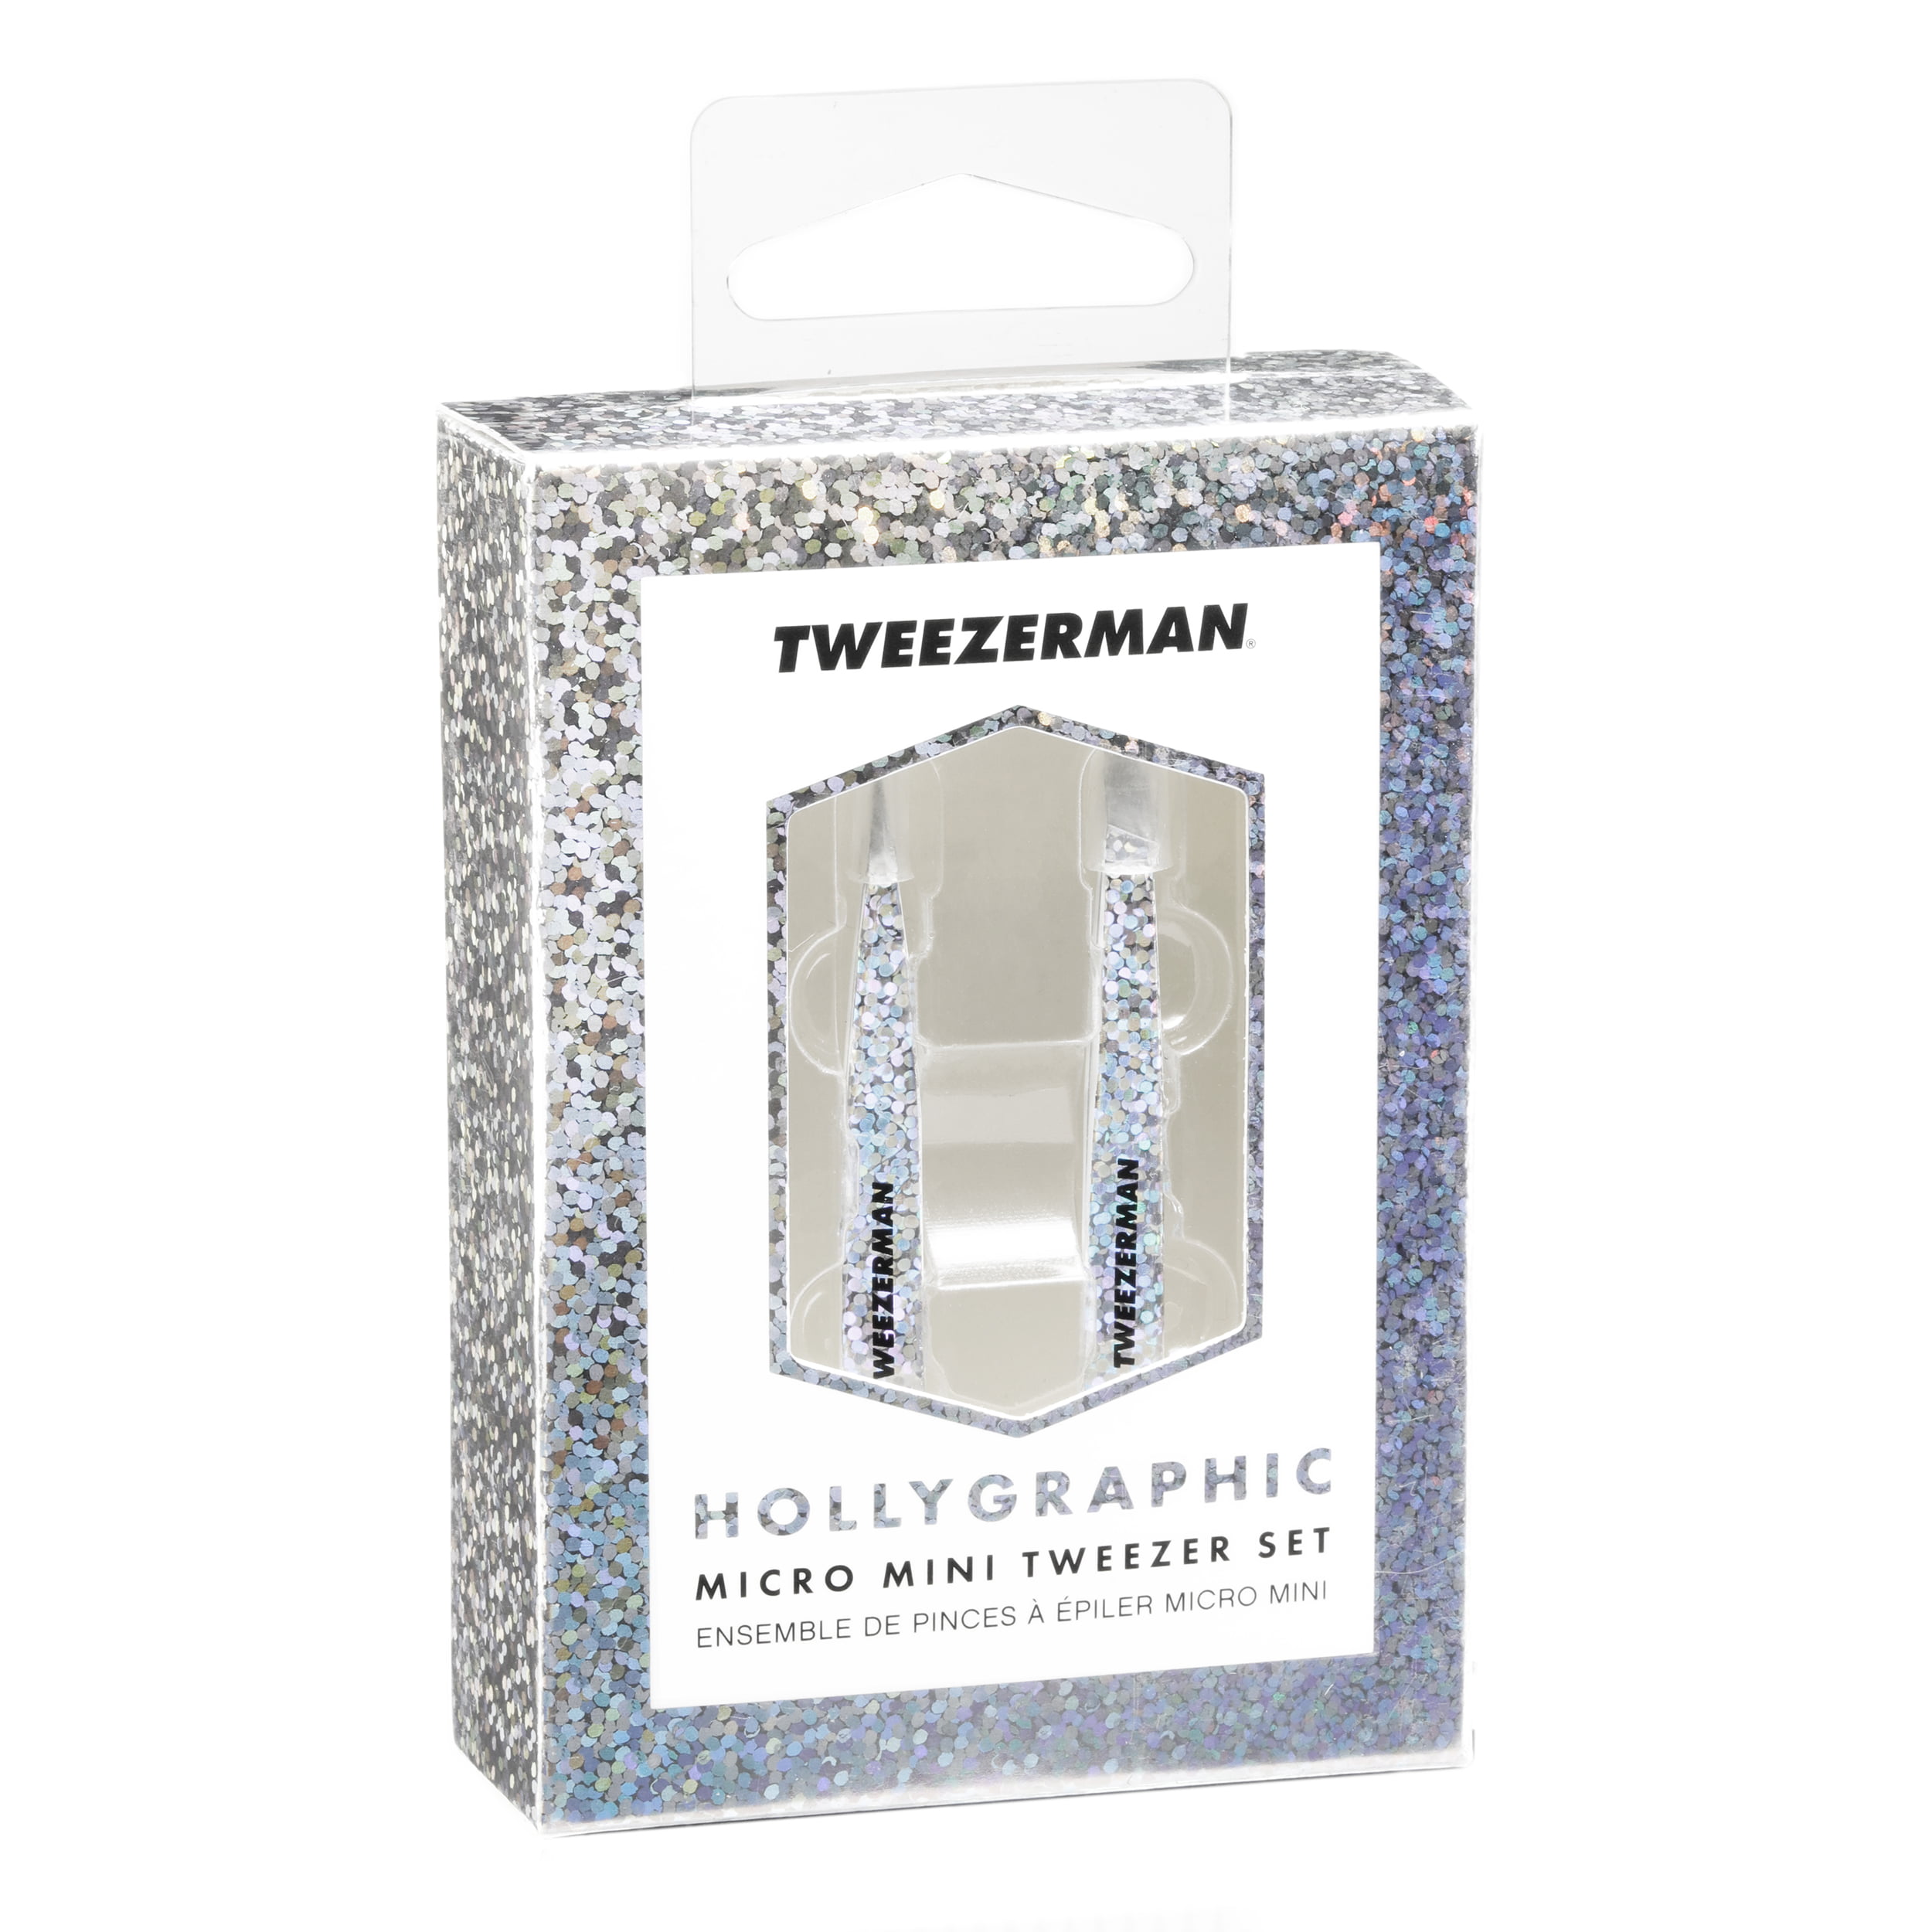 Tweezerman Hollygraphic Micro Mini Tweezer Set